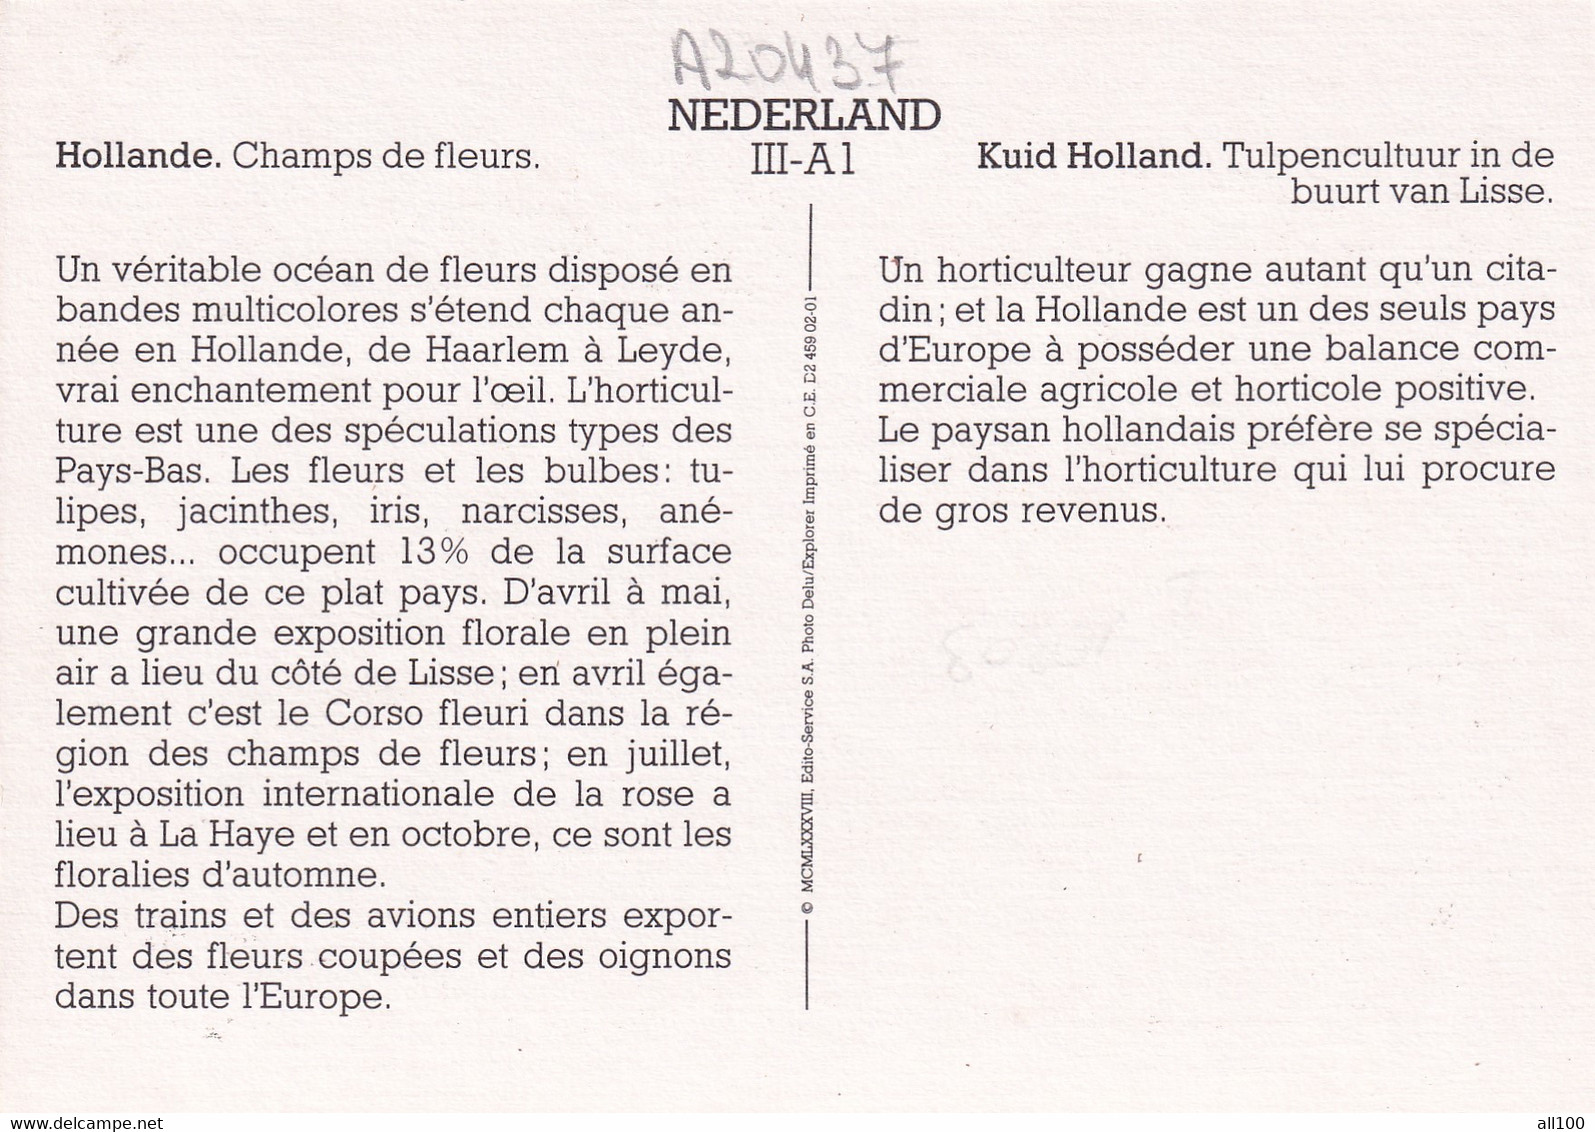 A20437 - ZUID HOLLAND TULPENCULTUUR IN DE BUURT VAN LISSE CHAMPS DU FLEURS HOLLANDE NEDERLAND NETHERLANDS TULIP FIELD - Lisse